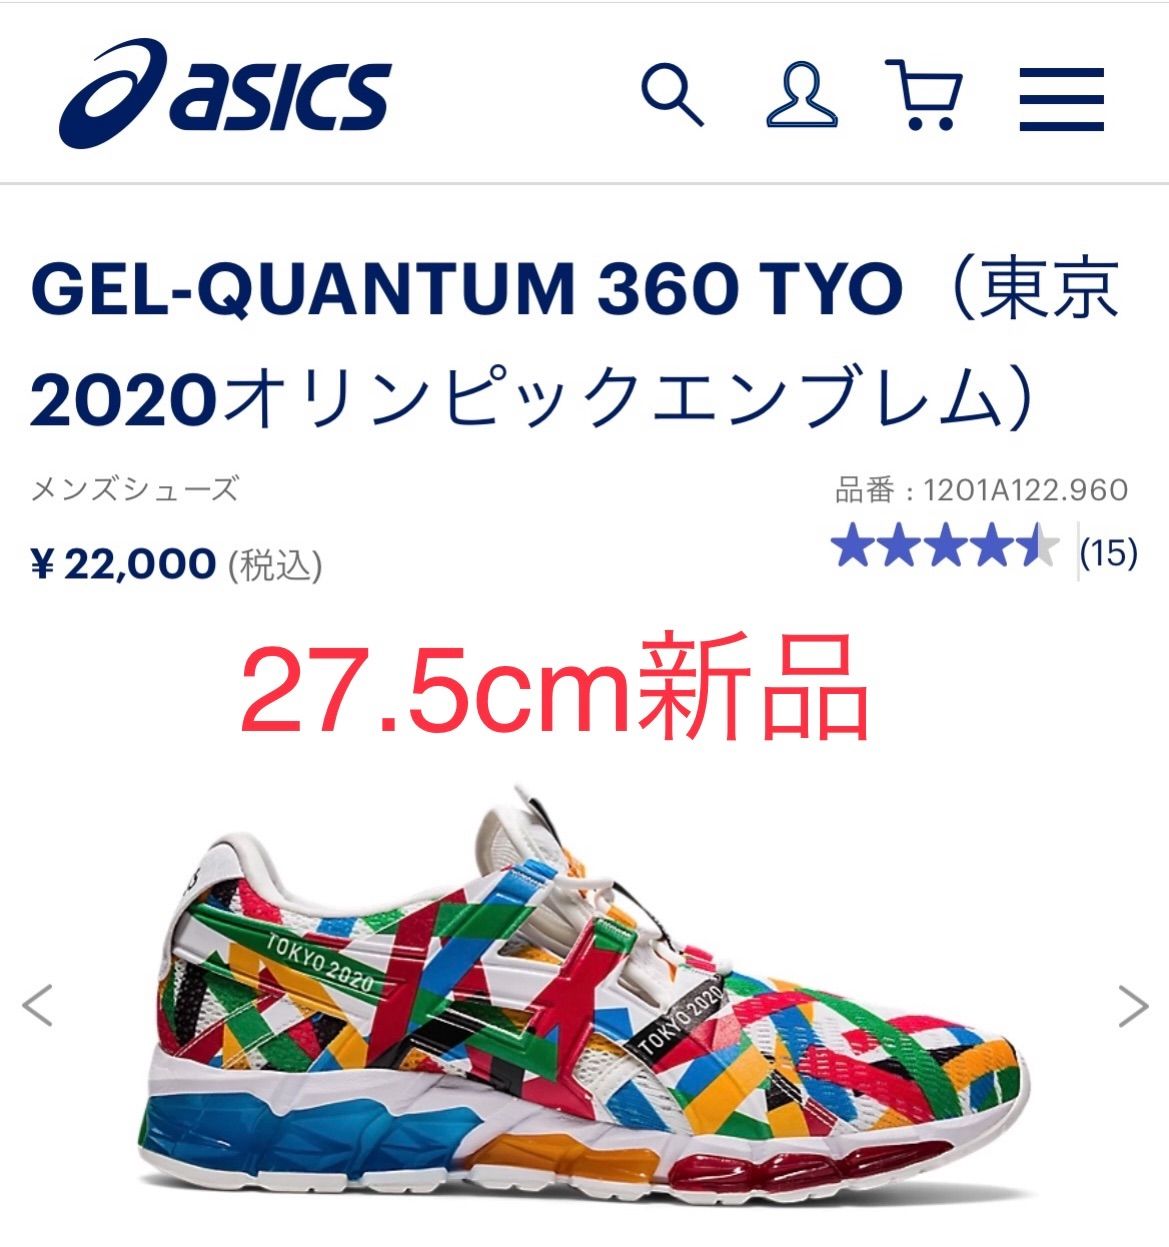 ASICS GEL-QUANTUM 360 5 東京2020 オリンピックエンブレム - マラソン、ランニング